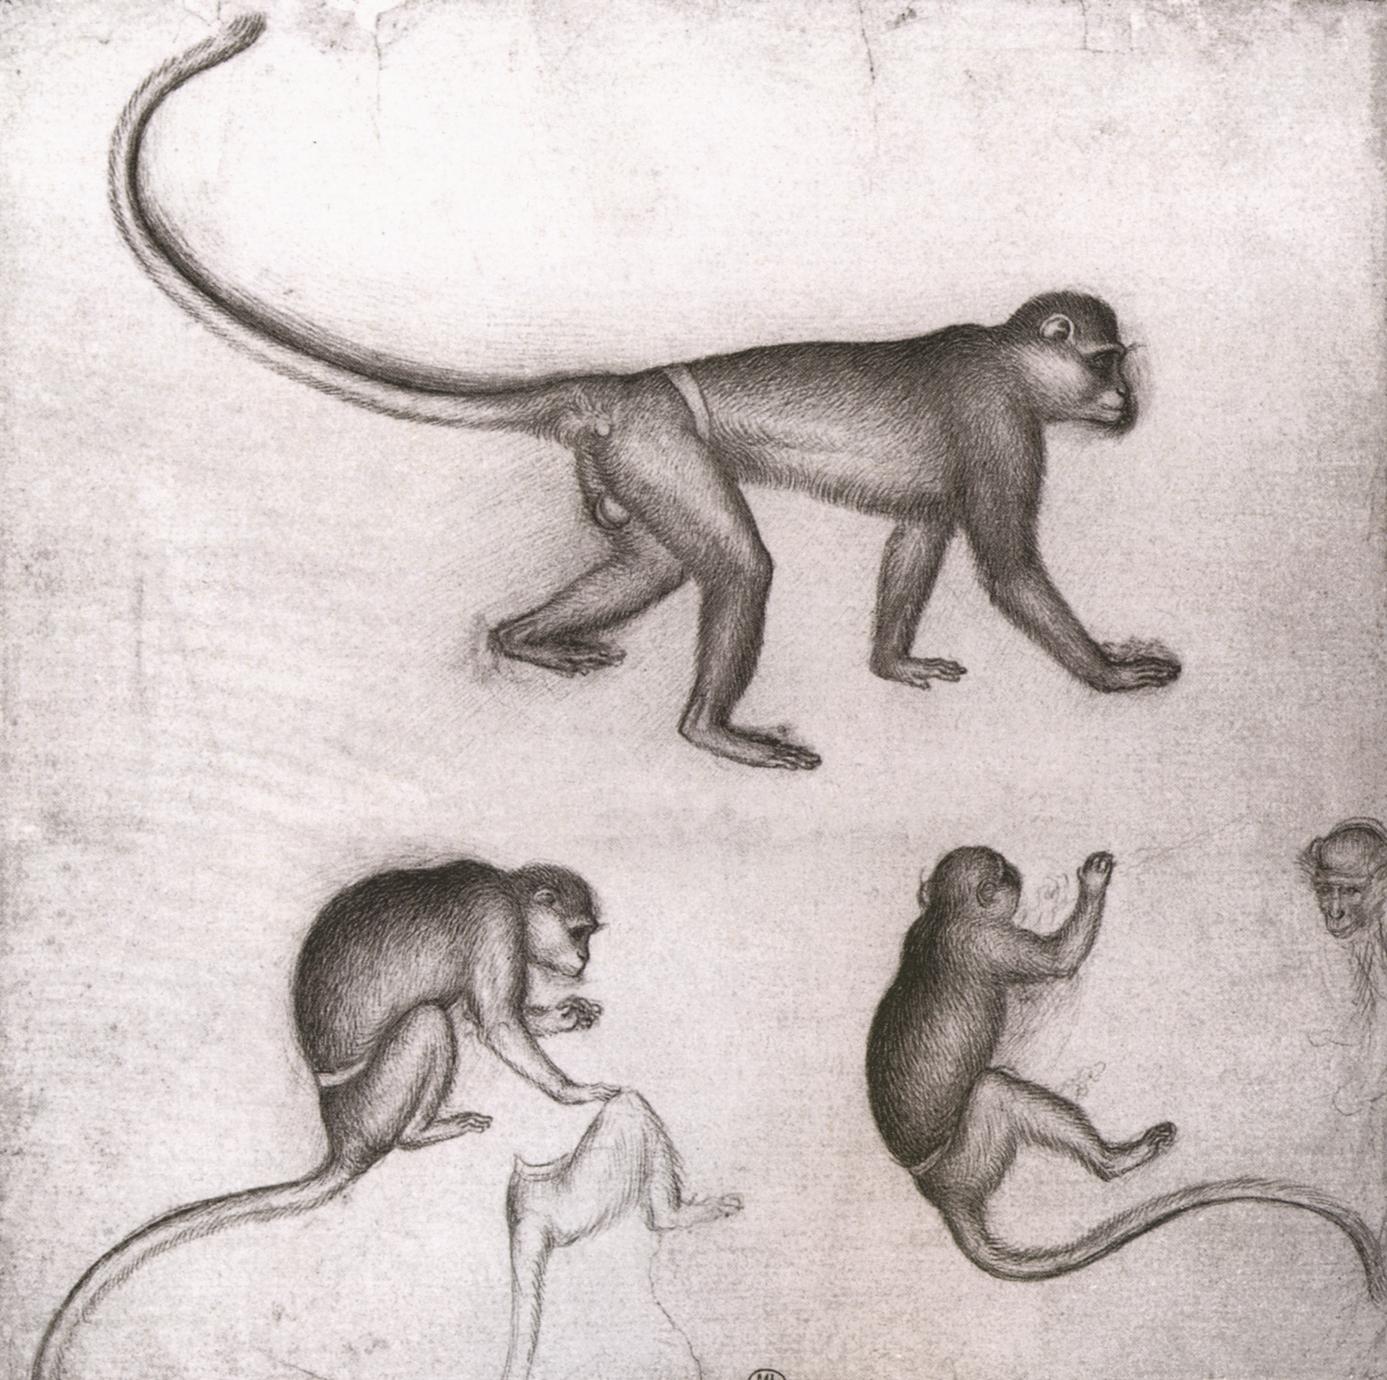 Squirrel monkey - ink illustration Drawing by Loren Dowding - Pixels